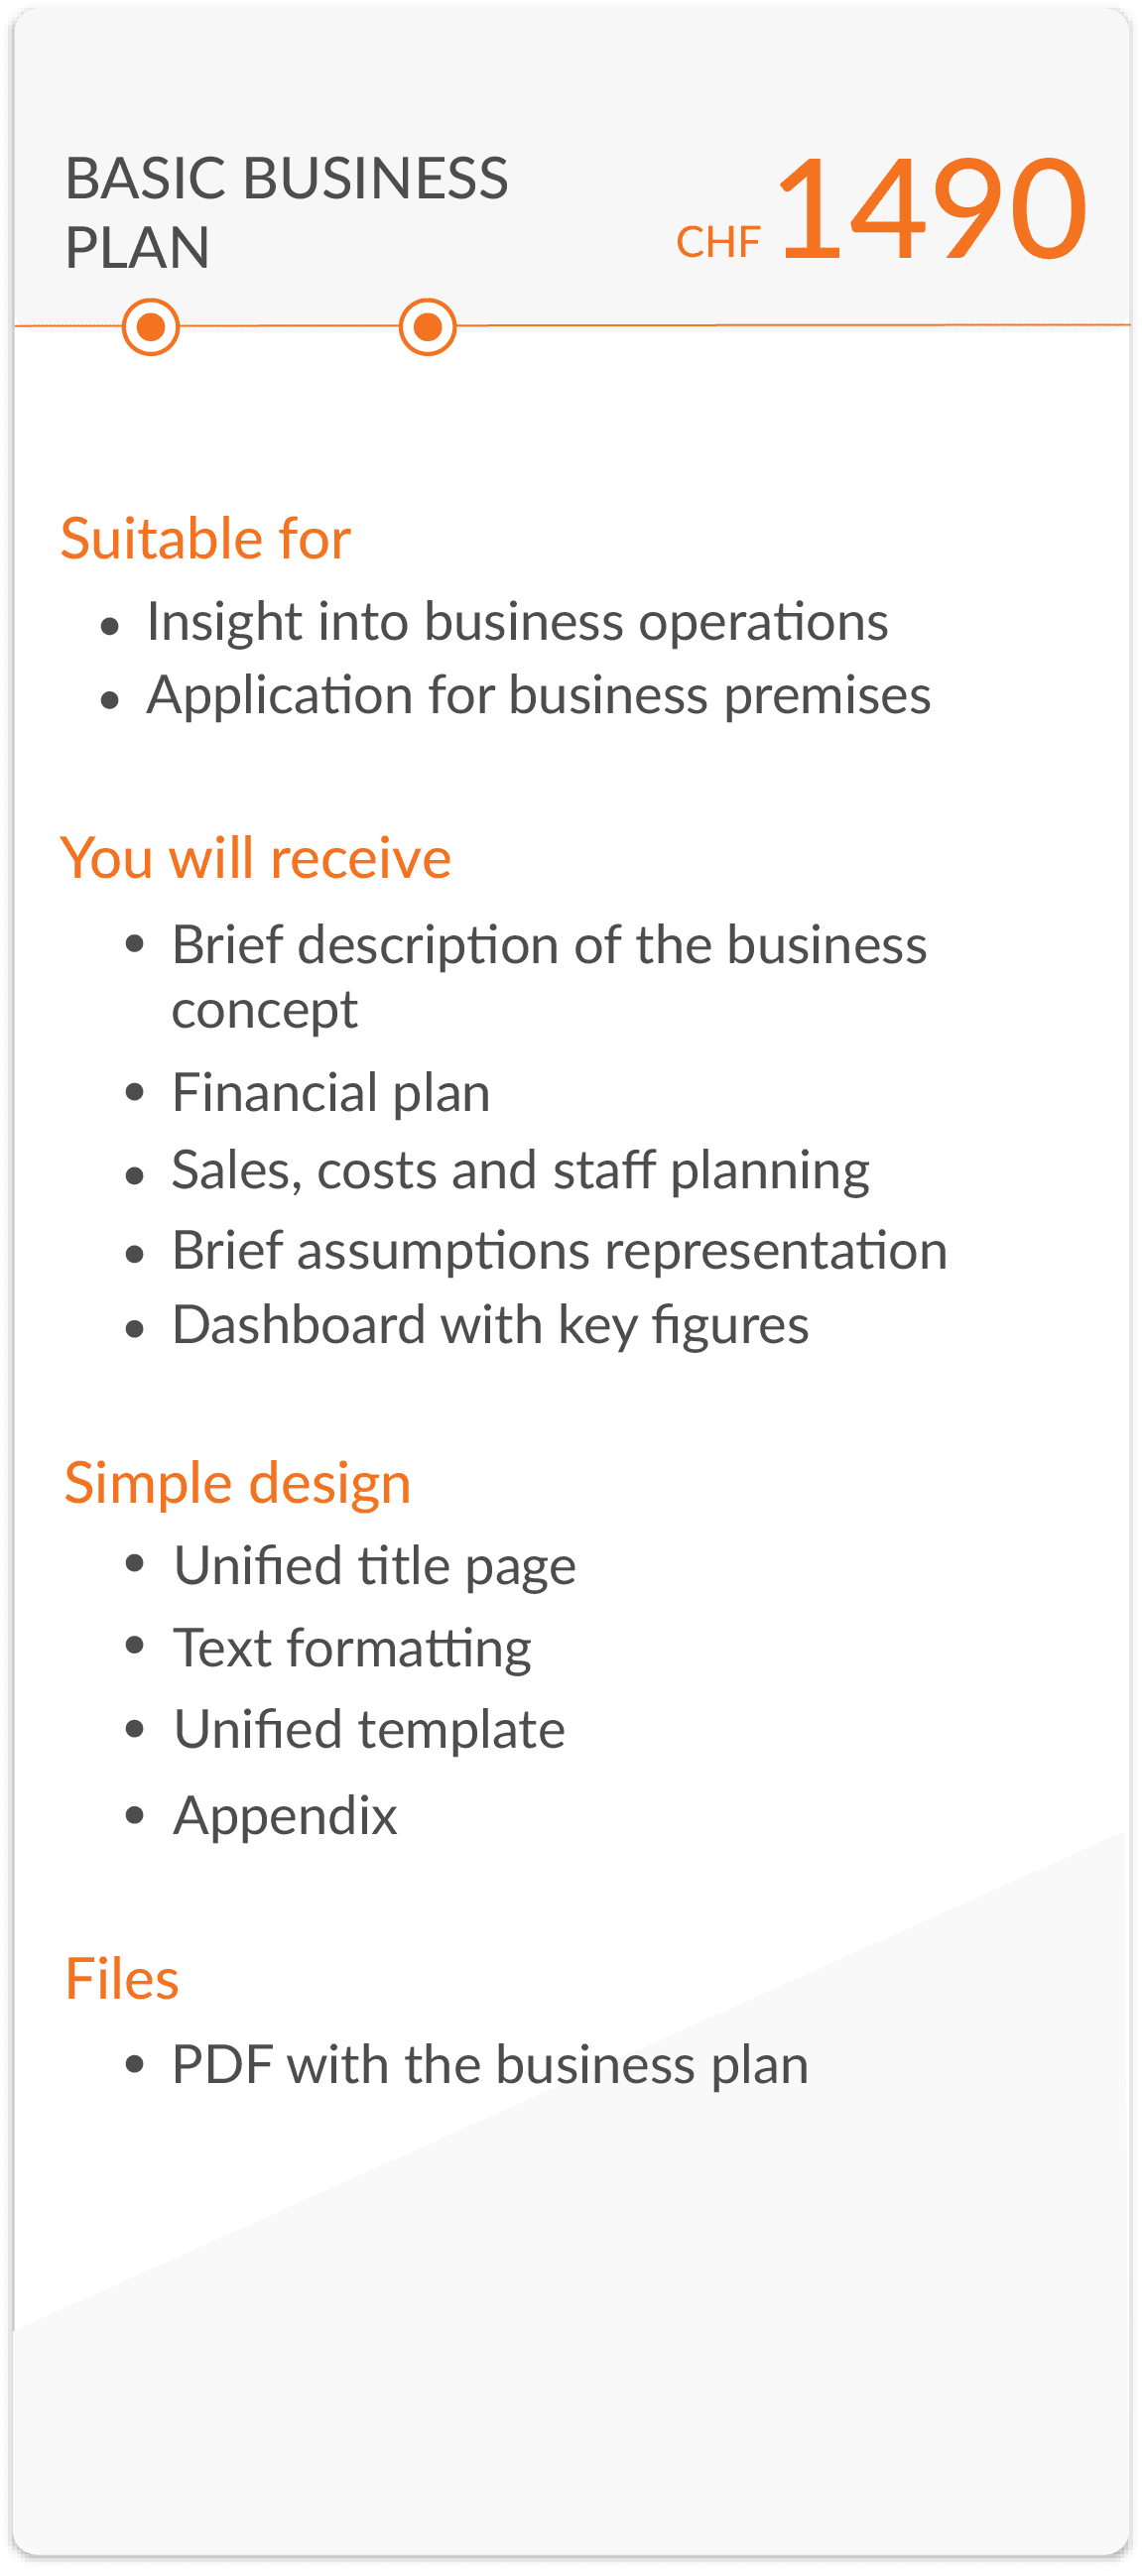 Basic business plan - CHF 1490